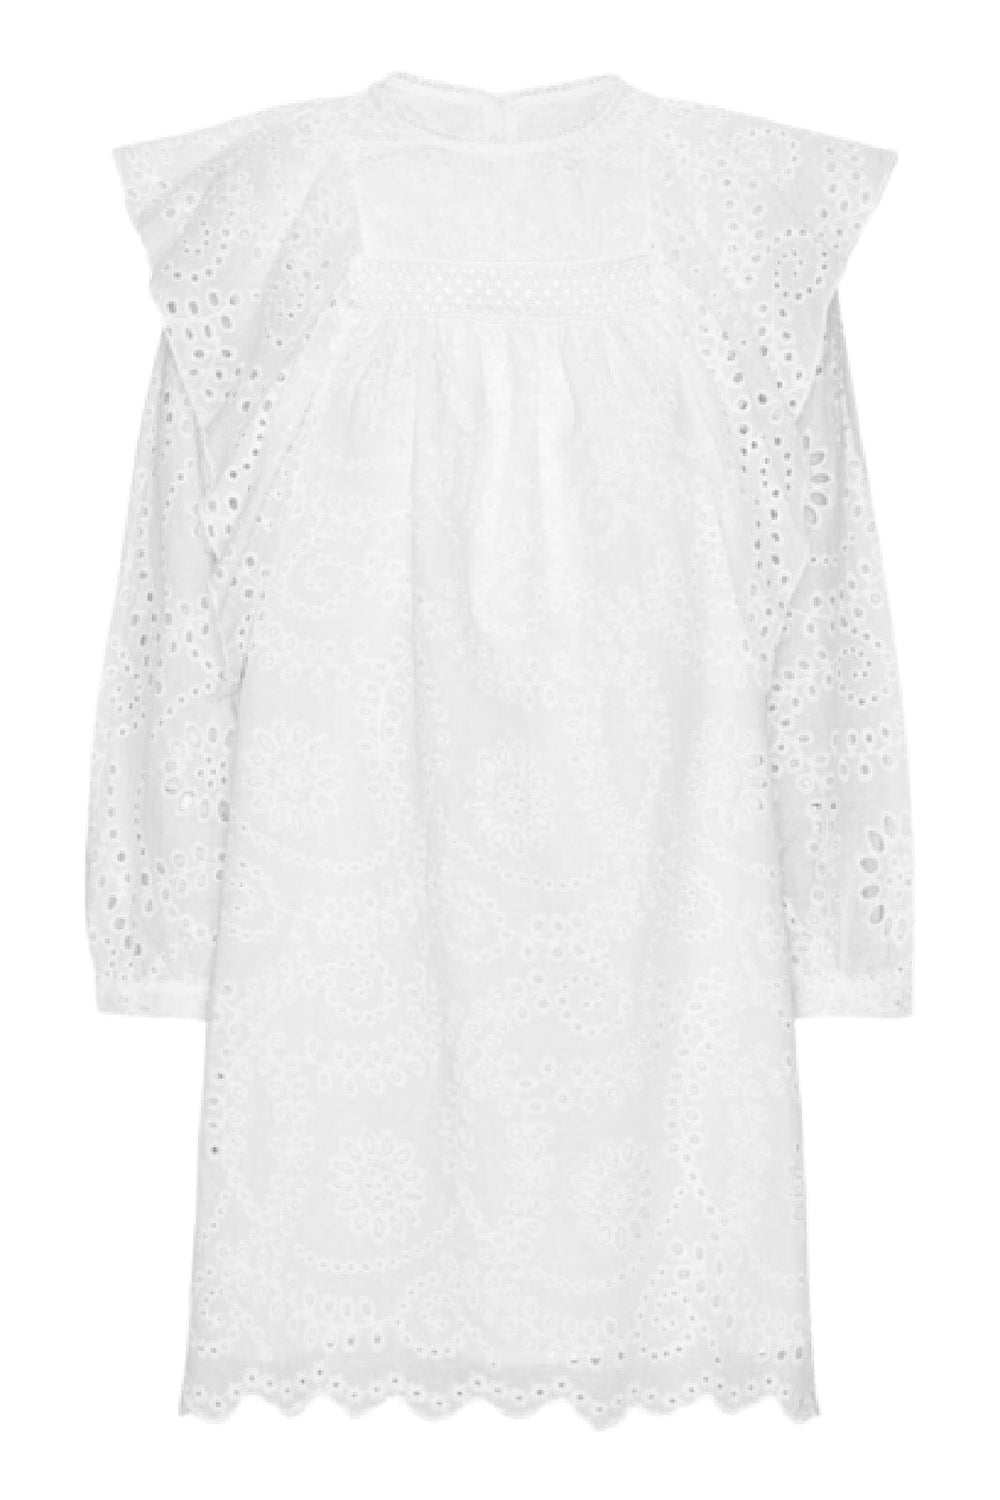 BYIC - Ingrid Dress Embroidery - White 